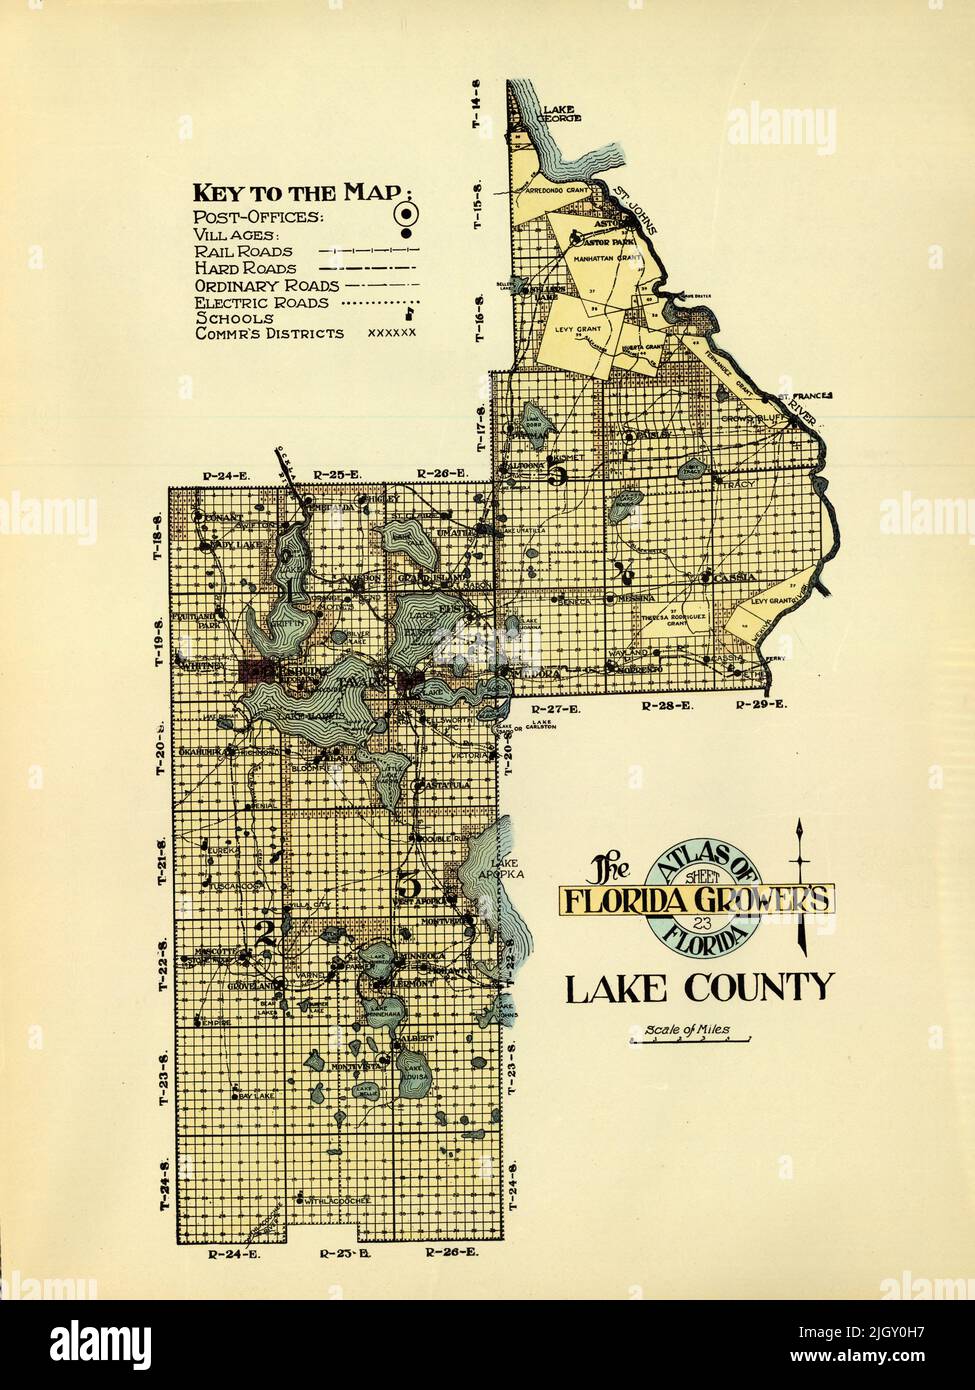 The Florida Growers Atlas of Florida, Map of Lake County, 1914 Stock Photo